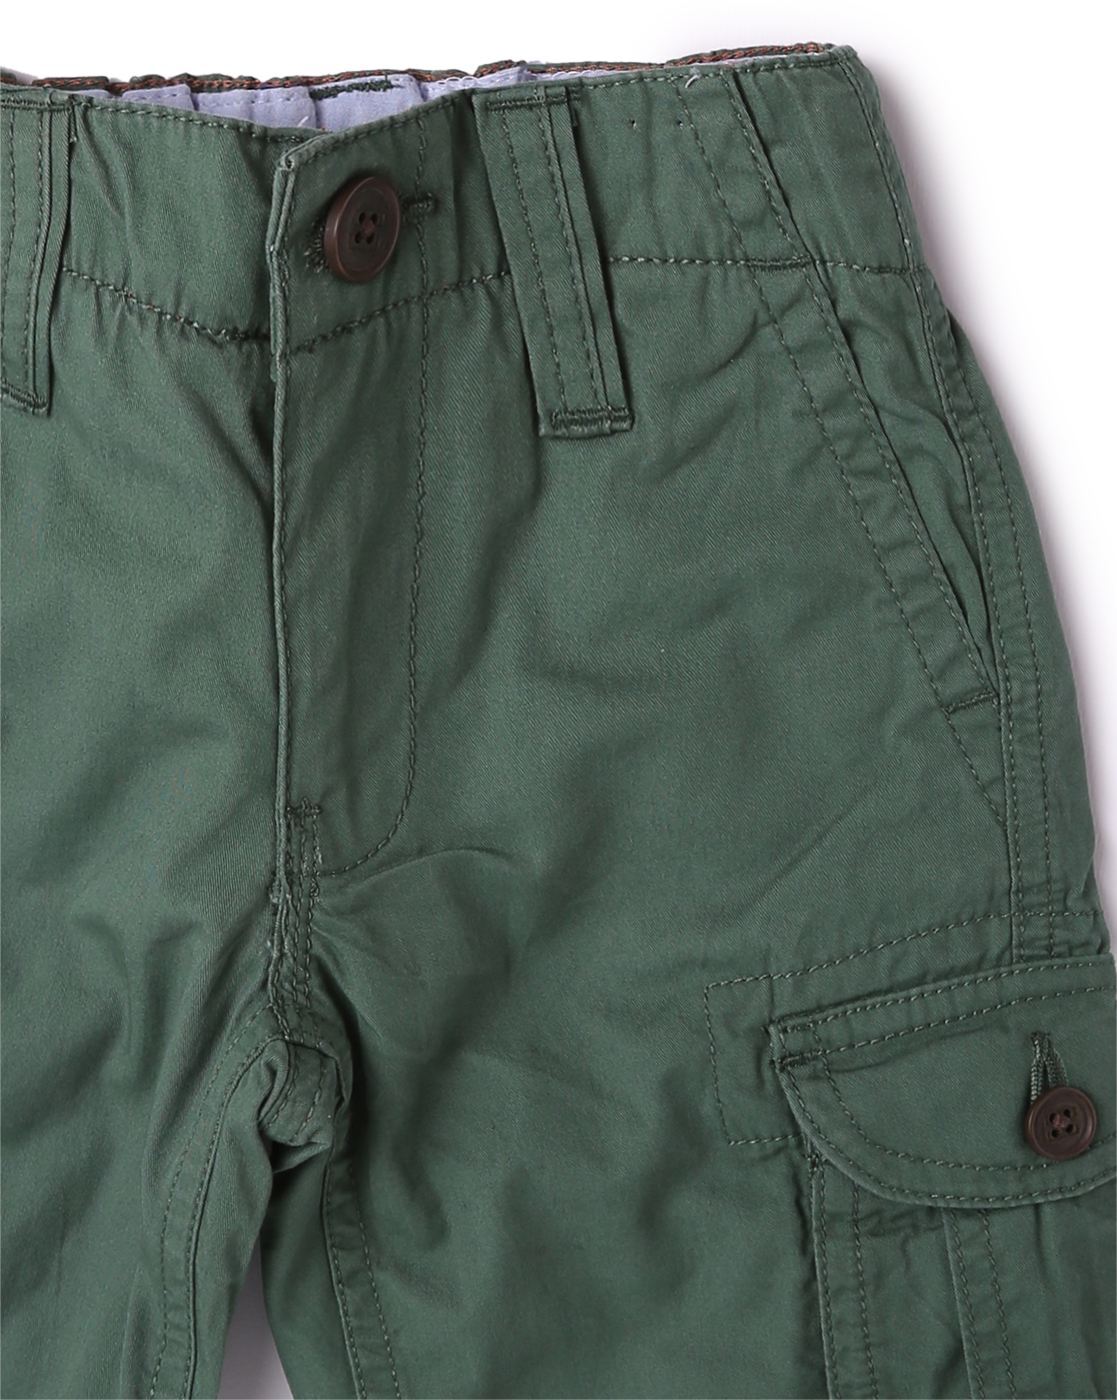 Gap Green Cargo Shorts Boys Size 12 NEW - beyond exchange